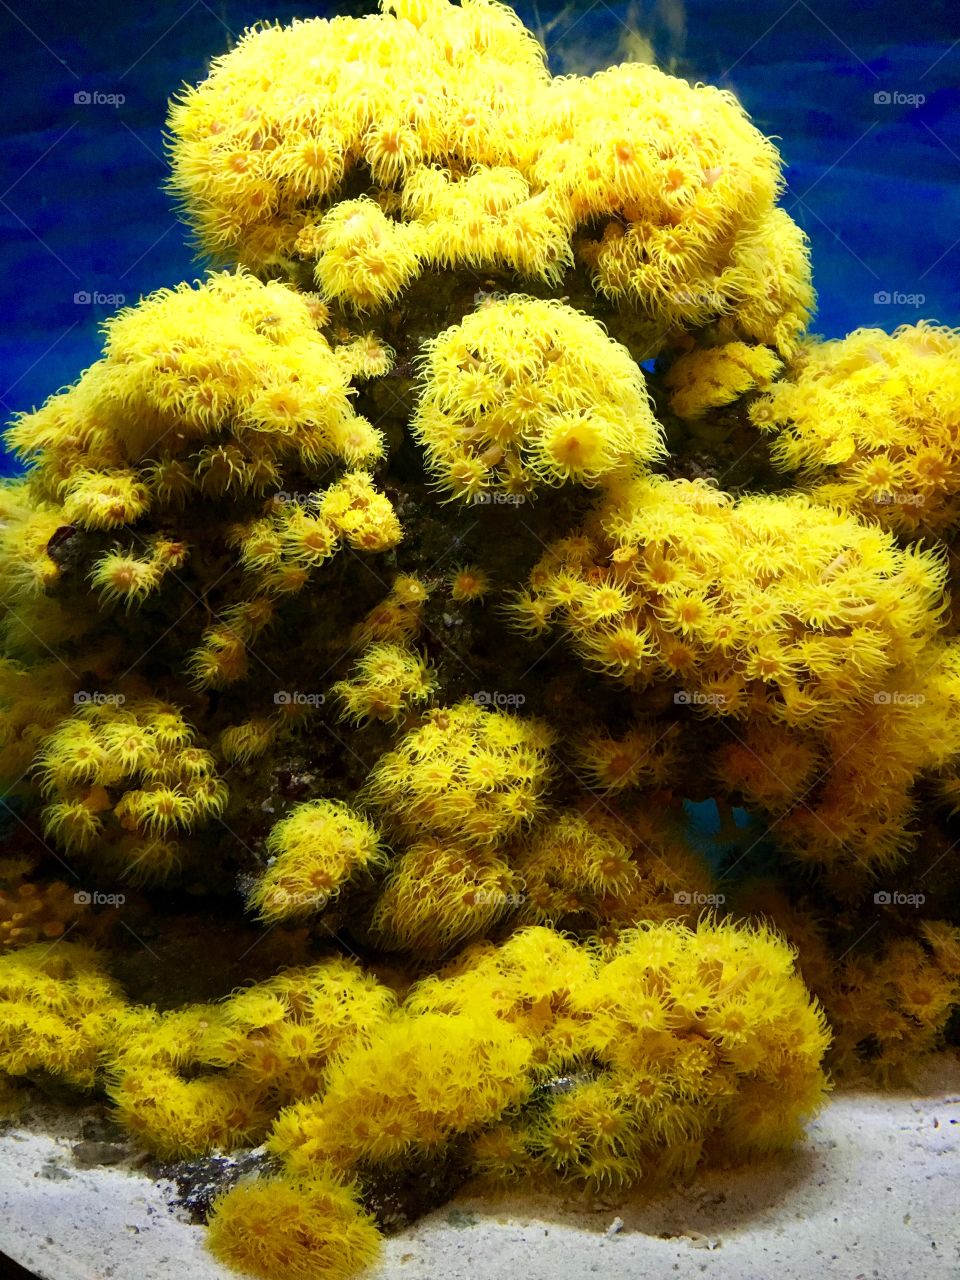 Underwater bright yellow coral anemone